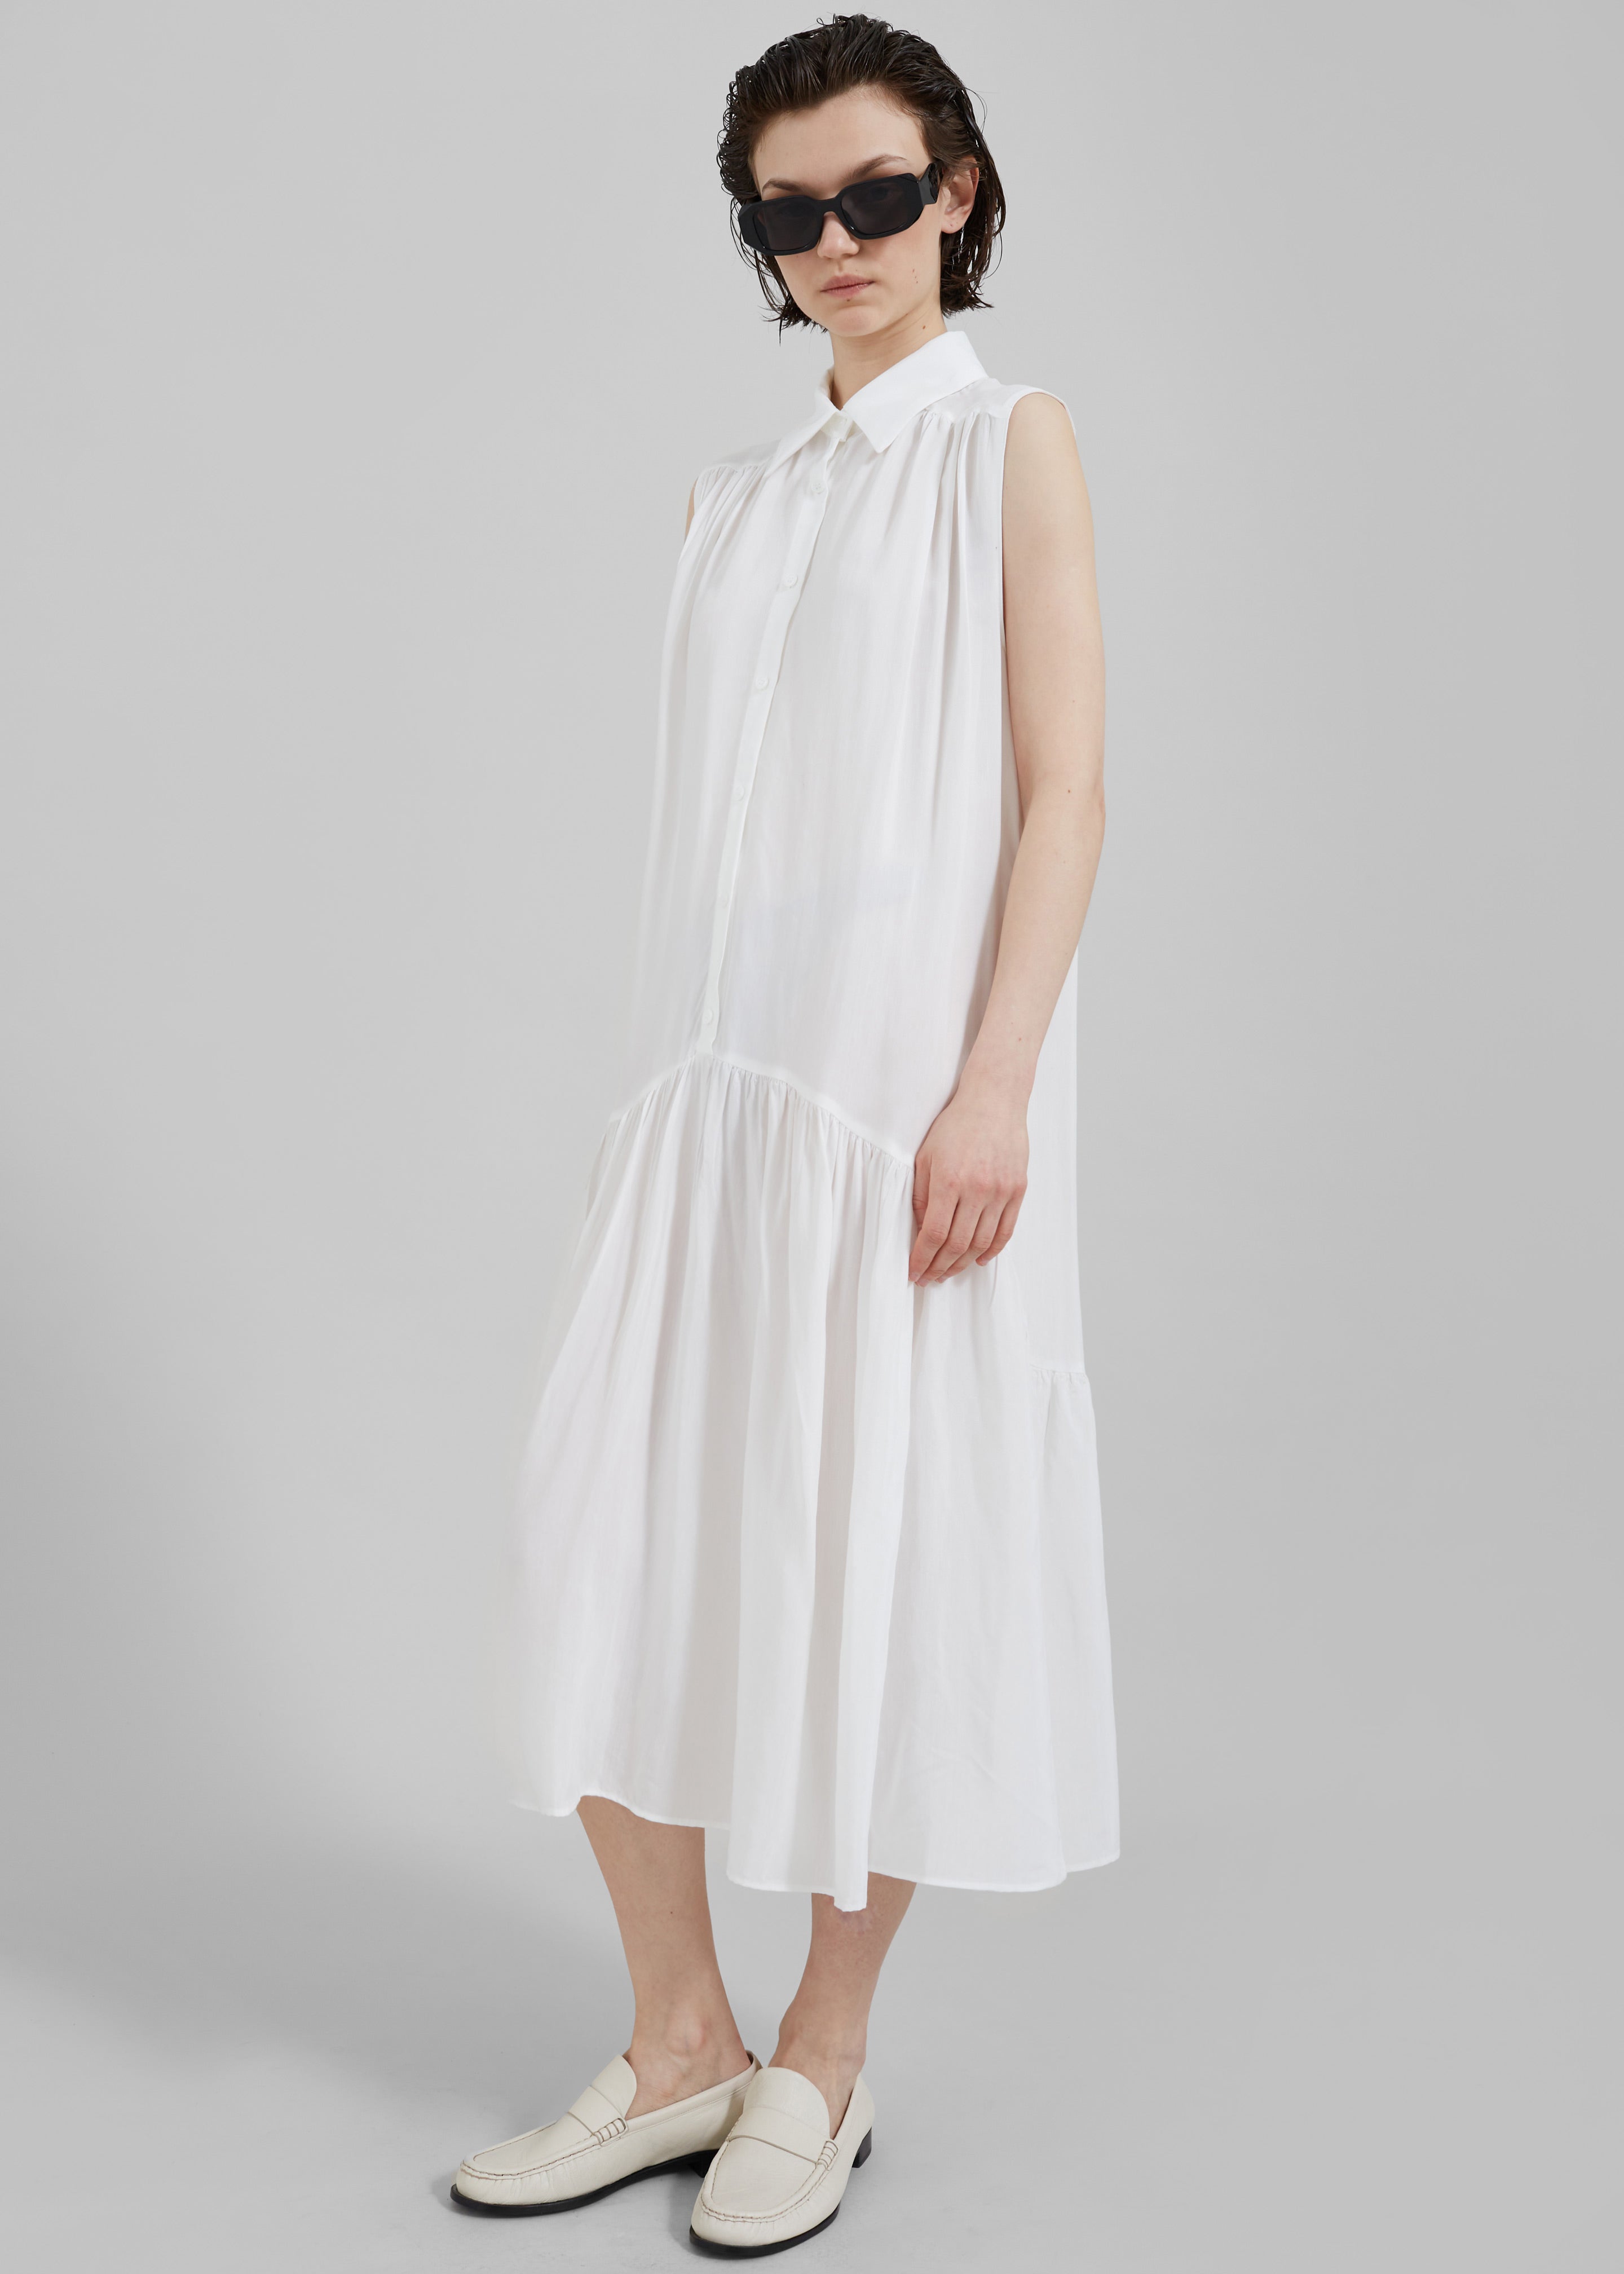 Maela Button Up Midi Dress - White - 8